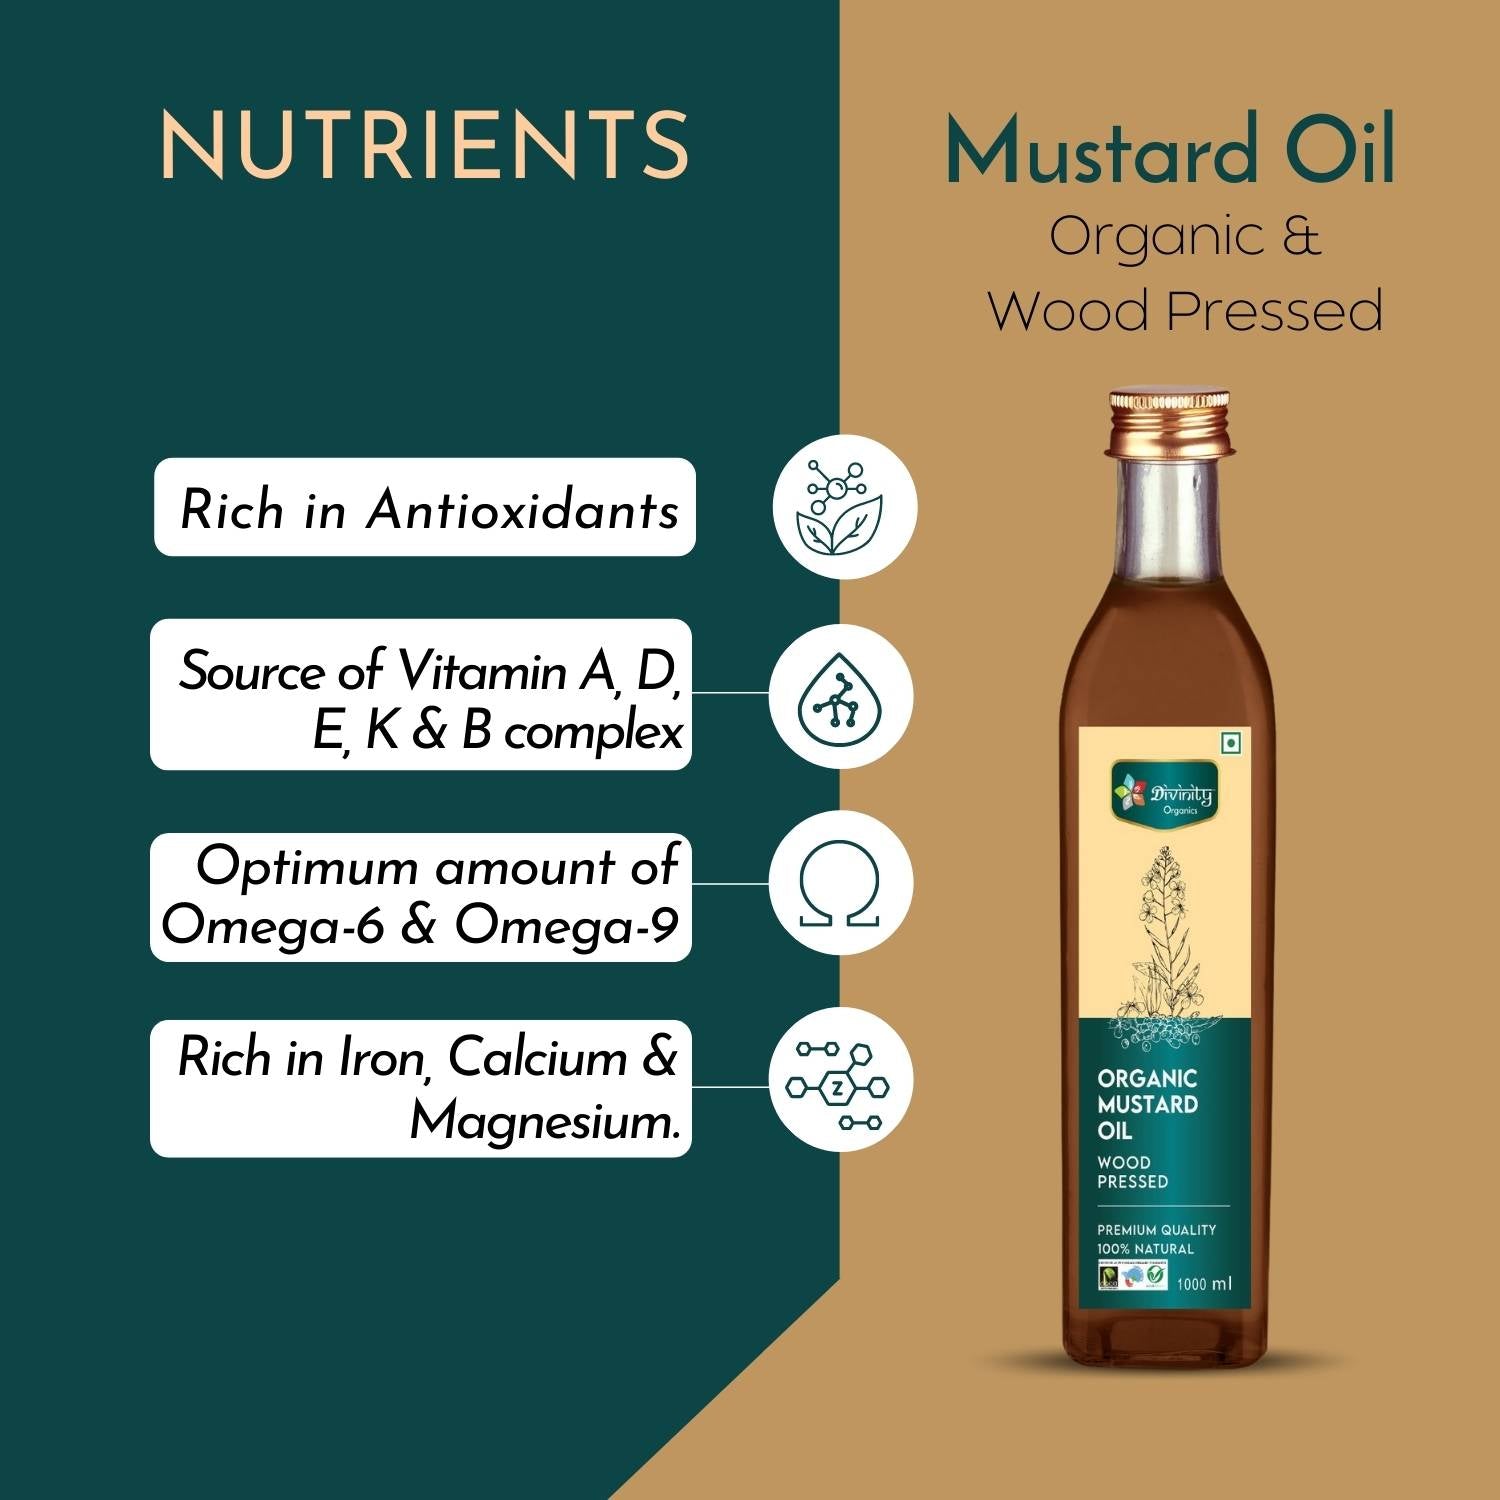 Divinity Organics - Organic Mustard Oil Wood Pressed Nutrients